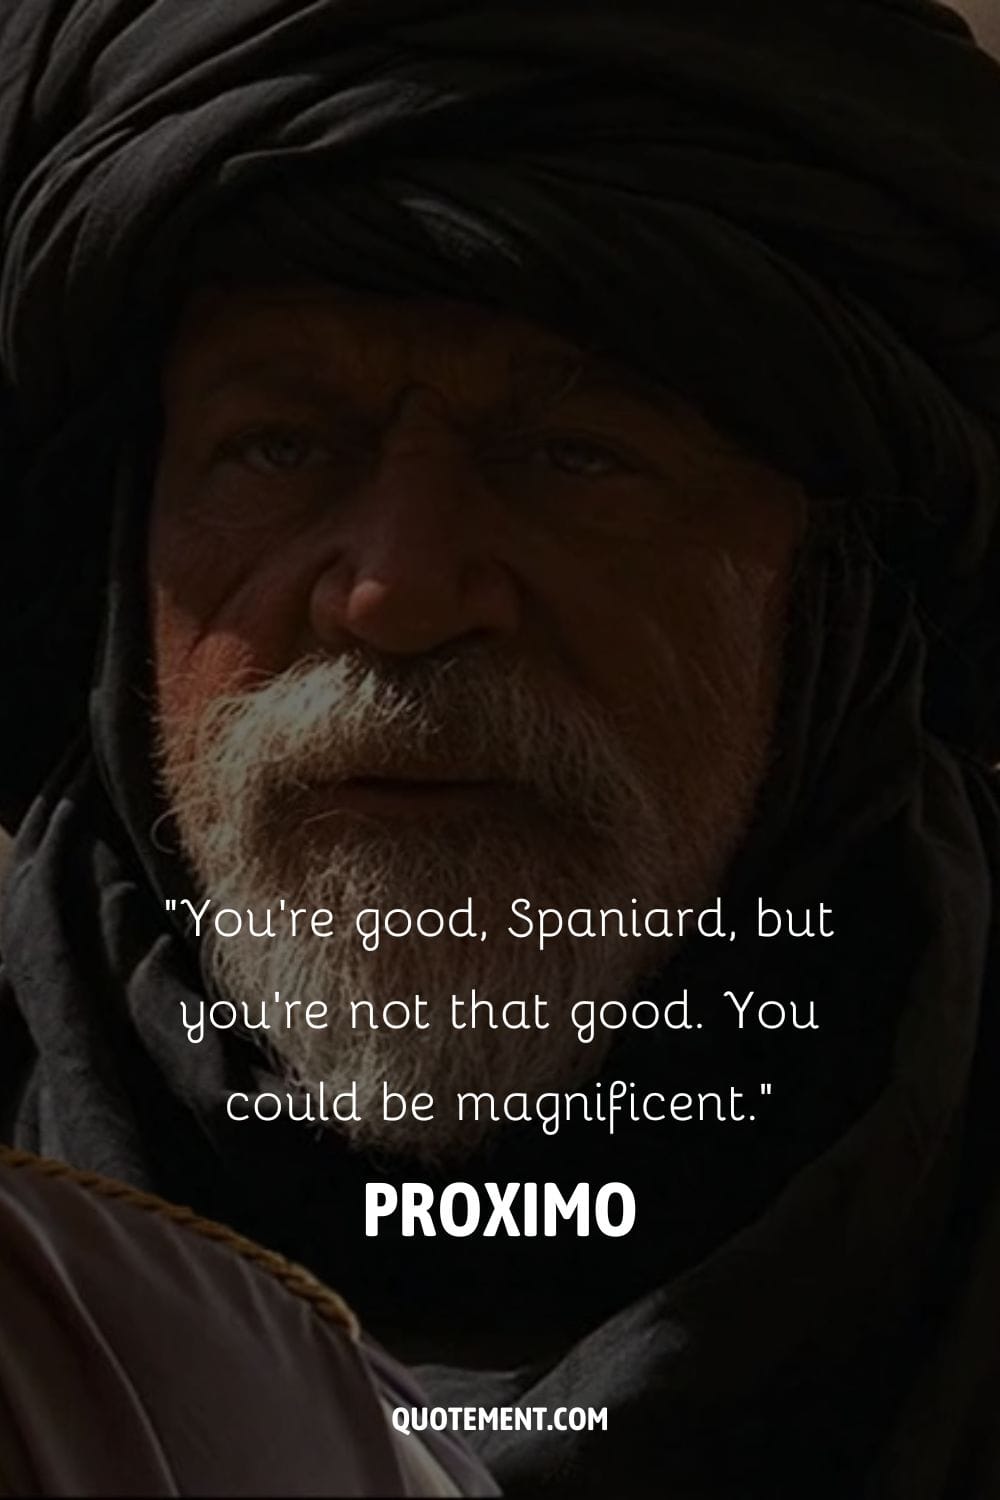 Proximo, the seasoned gladiator trainer in Gladiator.